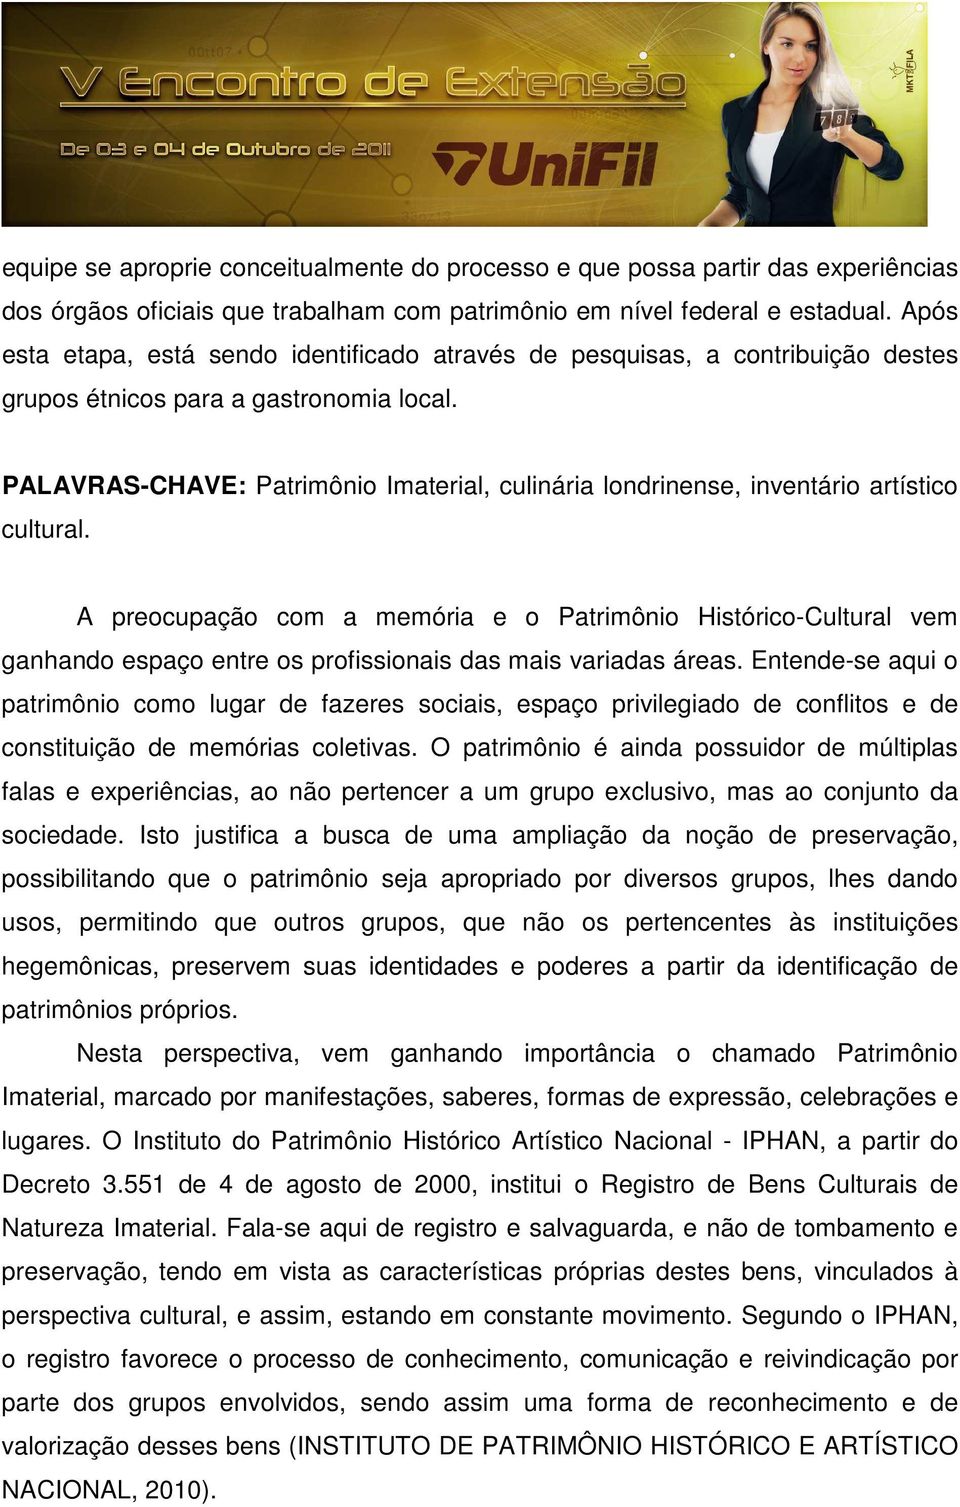 PALAVRAS-CHAVE: Patrimônio Imaterial, culinária londrinense, inventário artístico cultural.